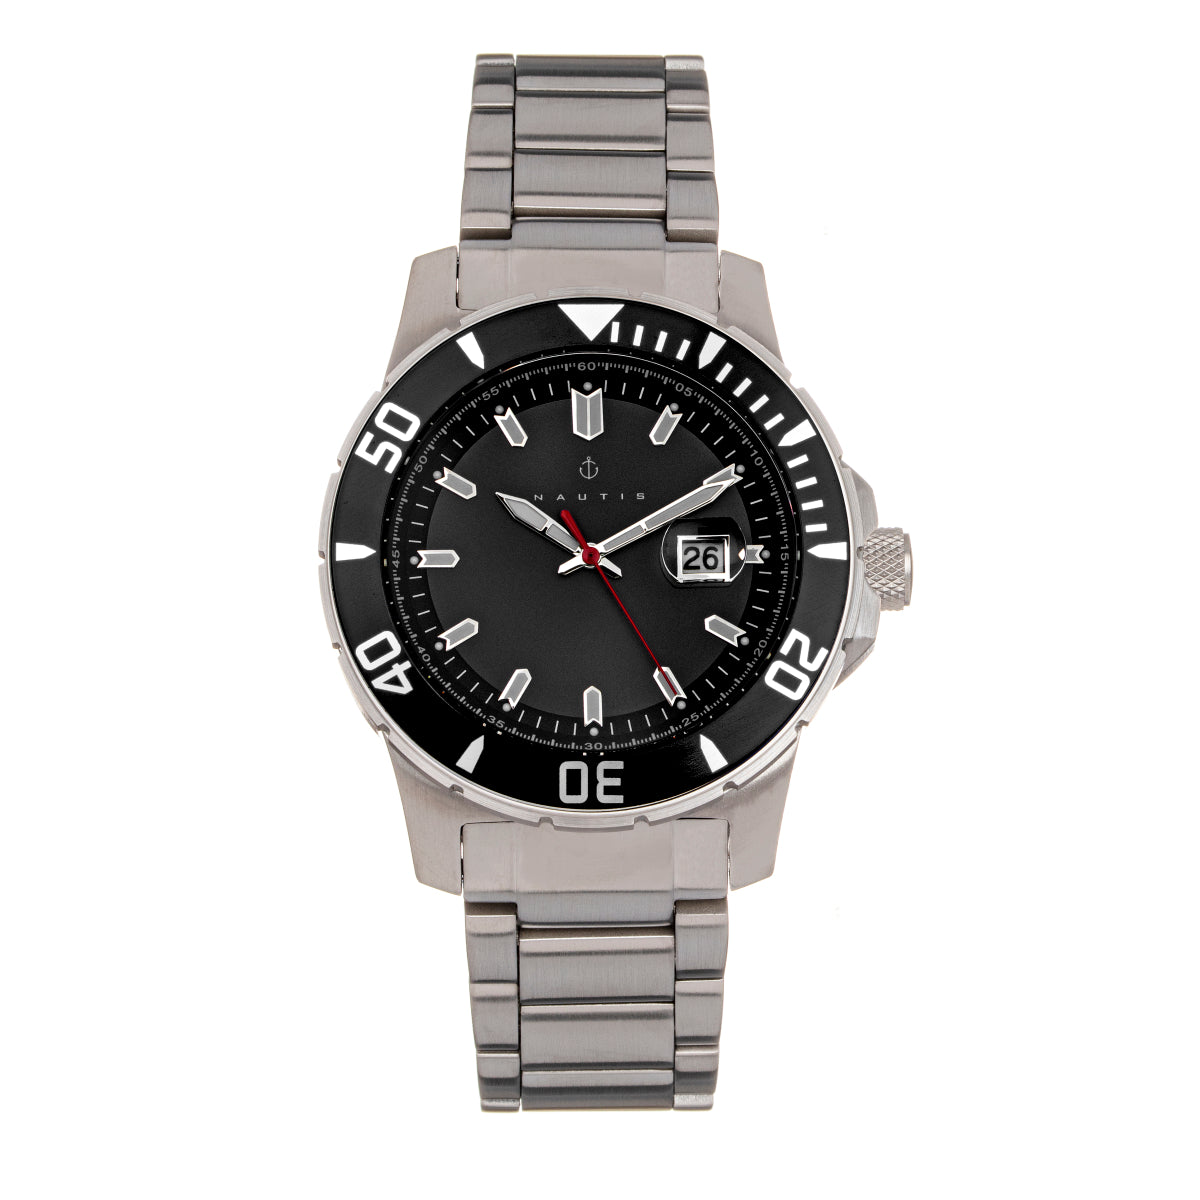 Nautis Admiralty Pro 200 Bracelet Watch w/Date